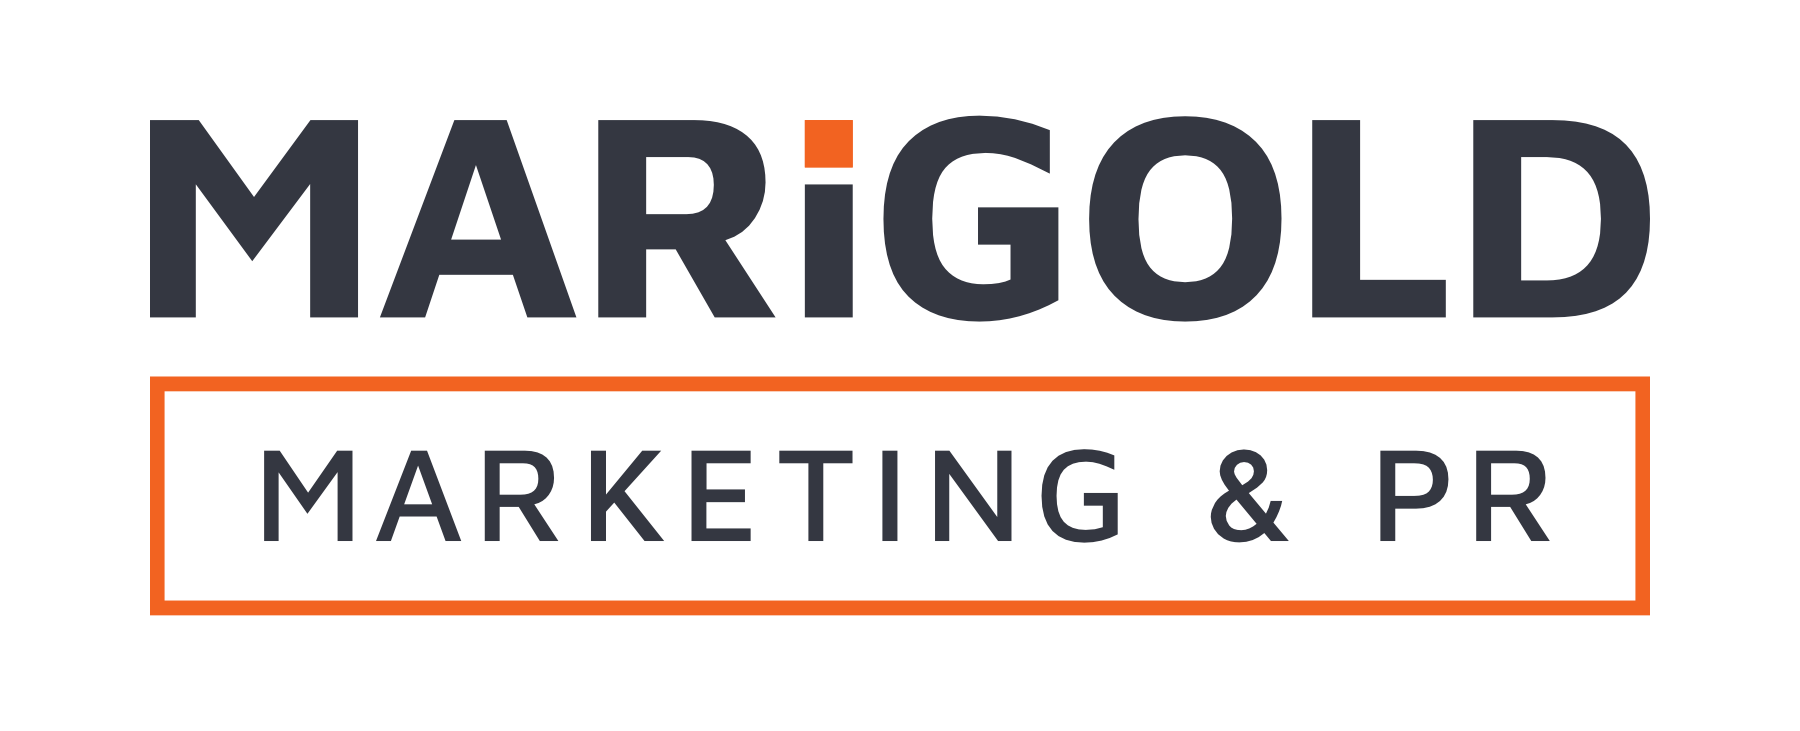 Marigold Marketing & PR Logo